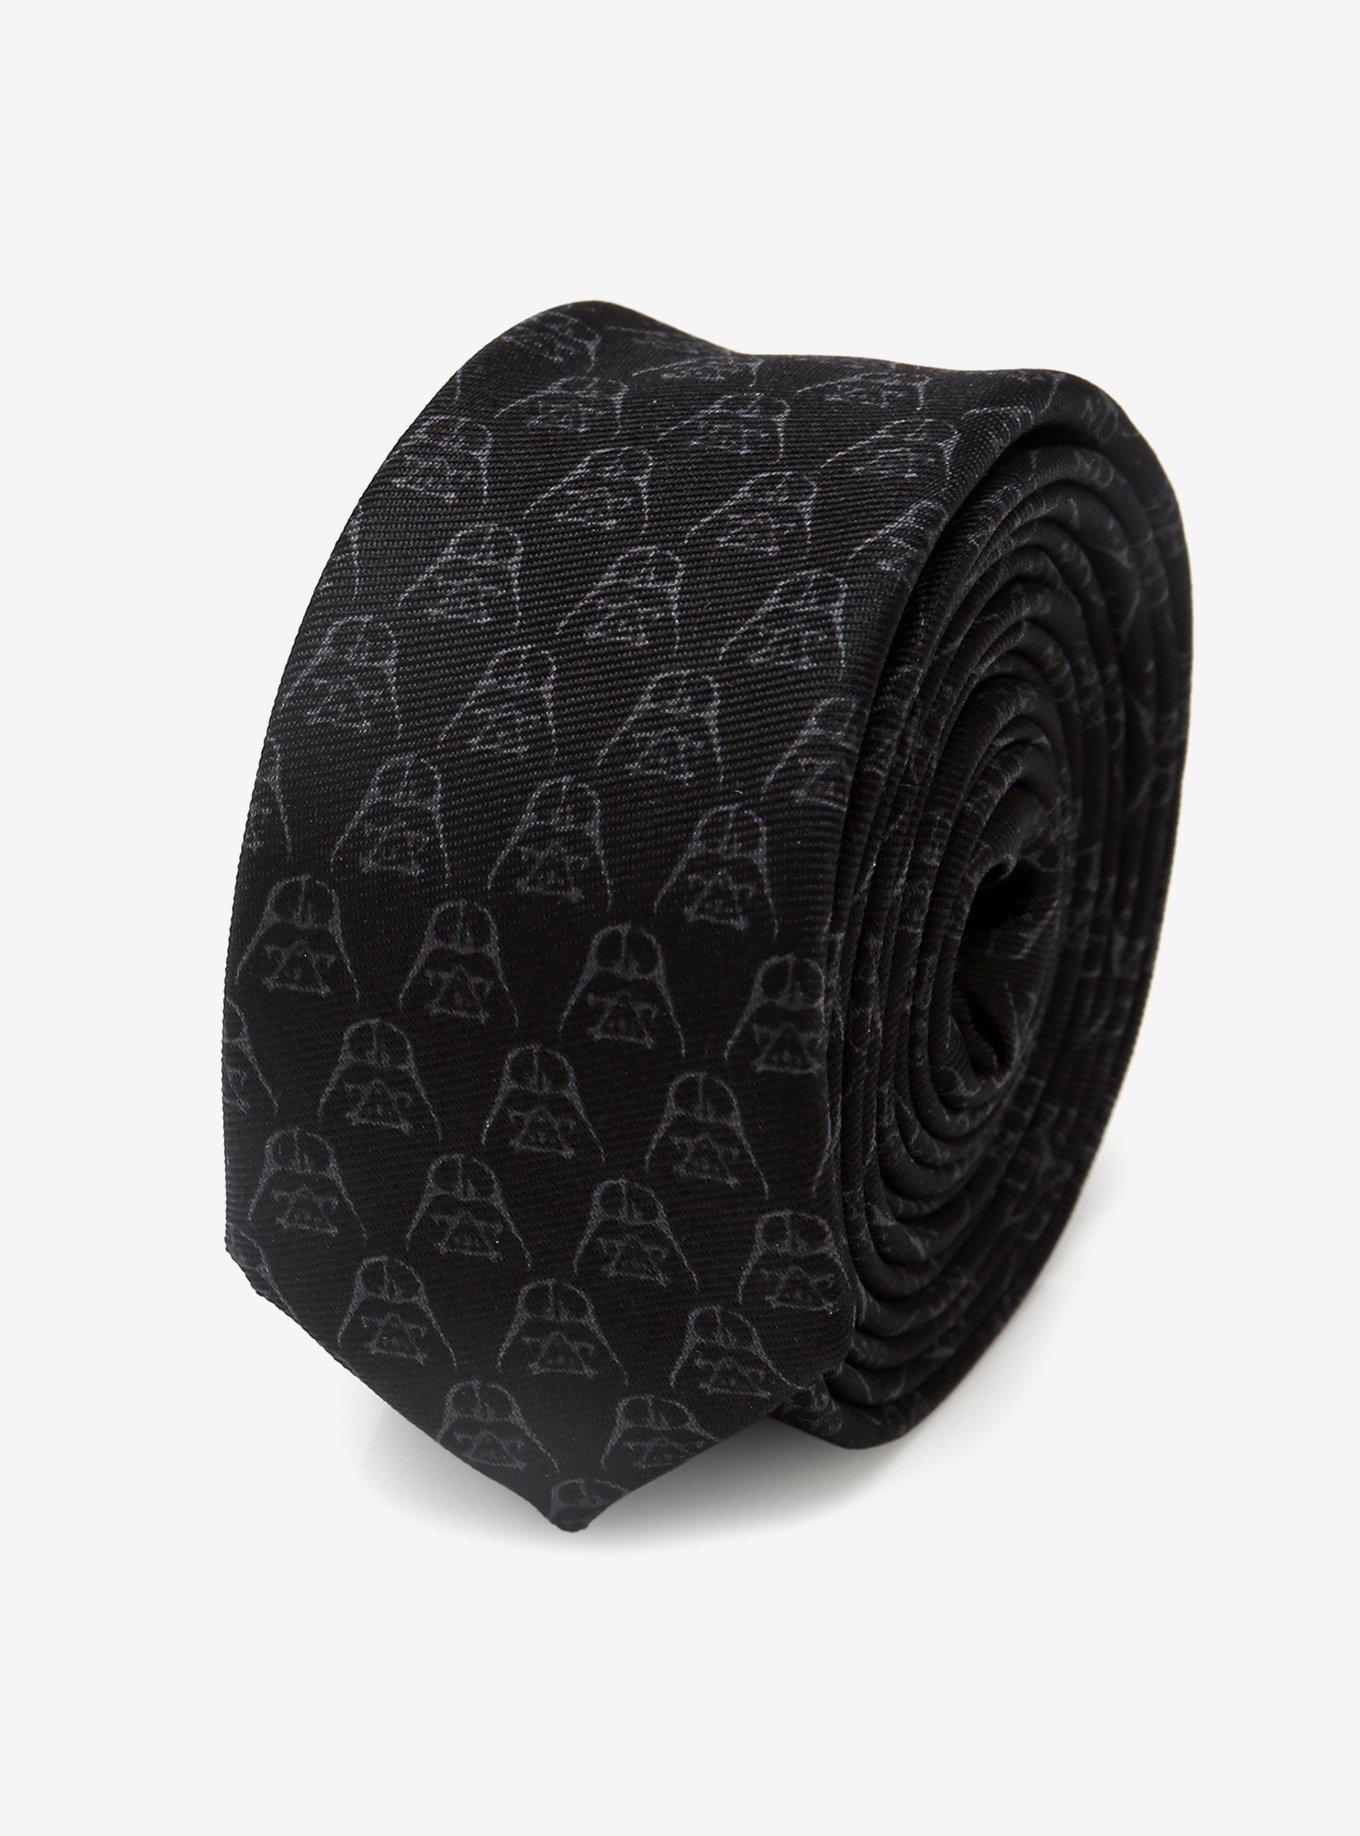 Star Wars Darth Vader Black Skinny Tie, , hi-res